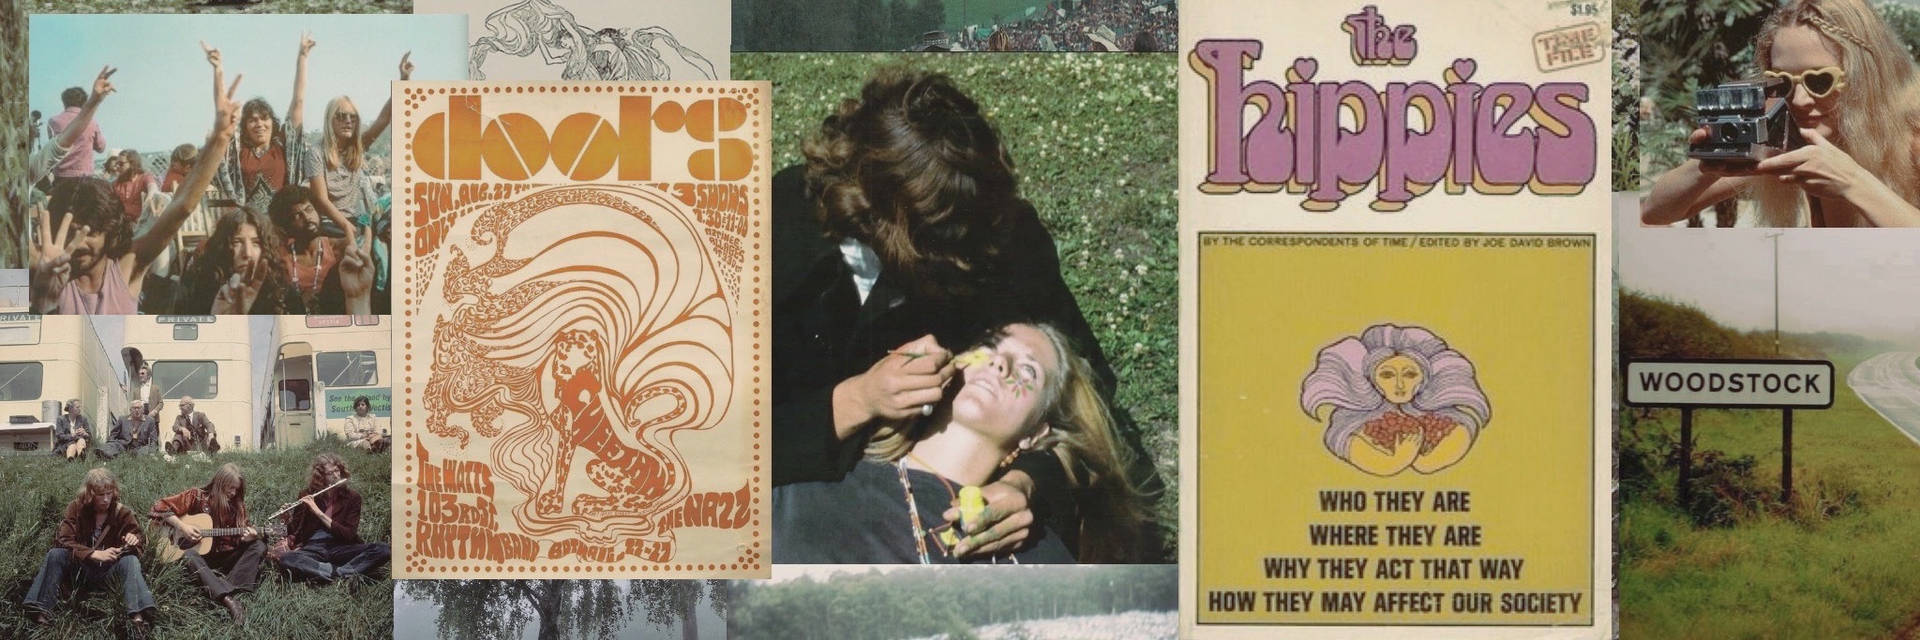 Woodstock Aesthetic Header Wallpaper